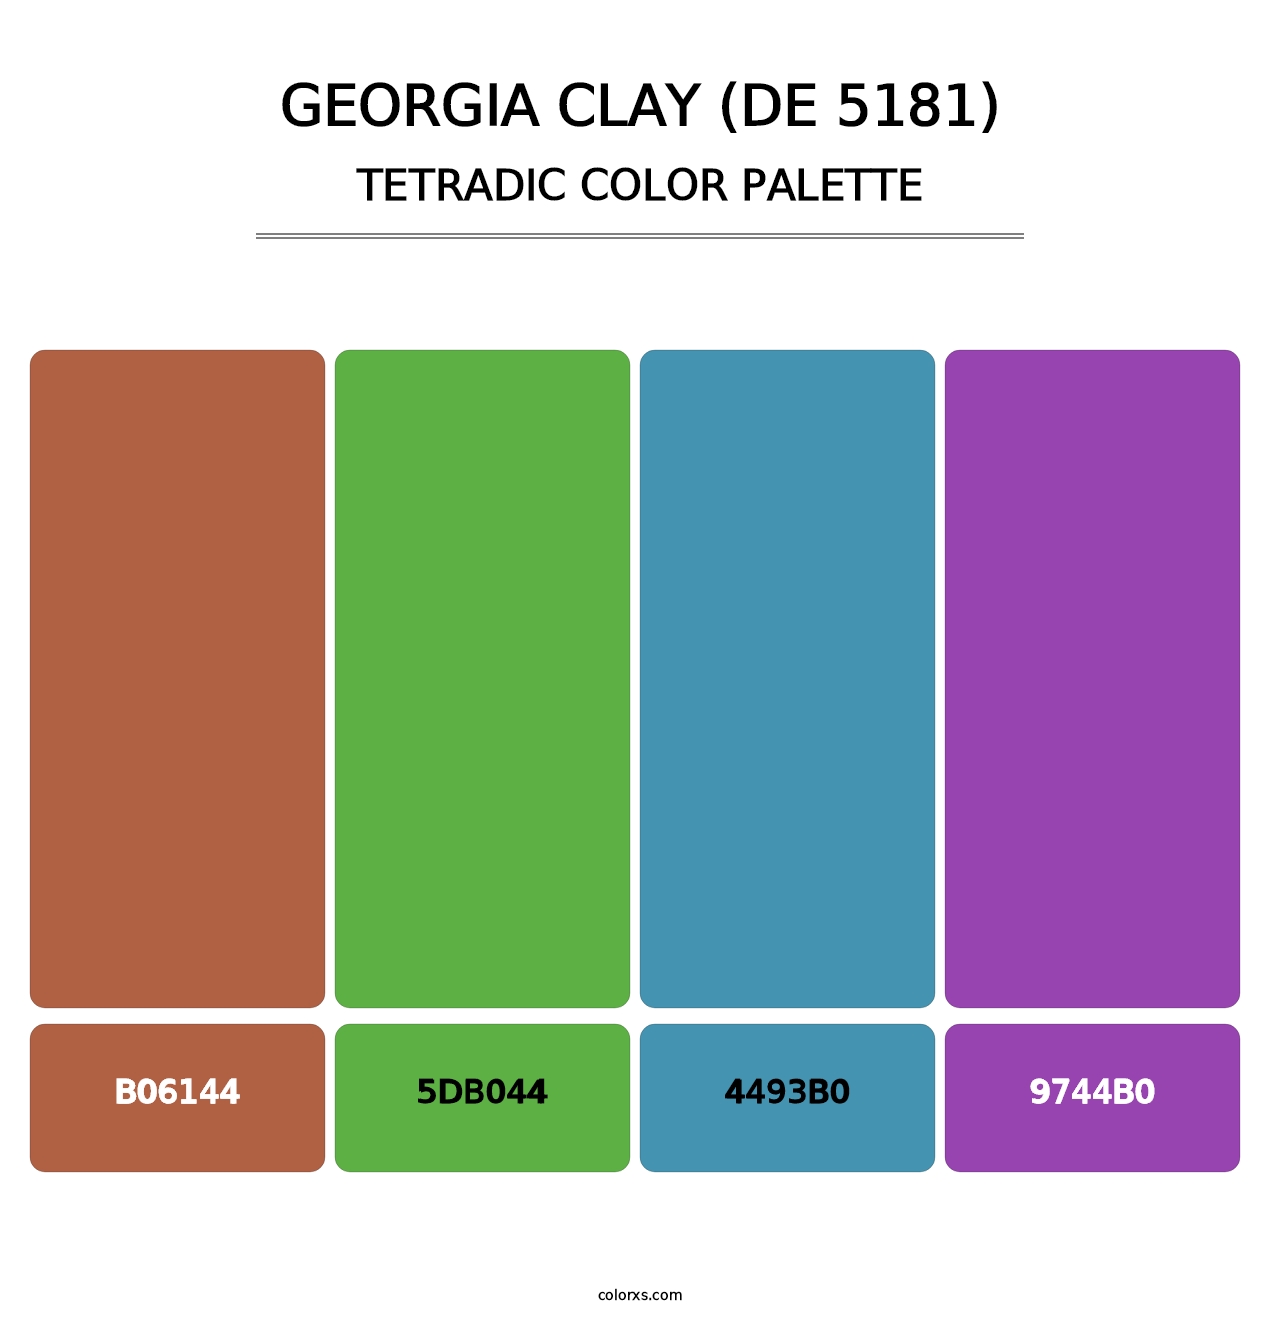 Georgia Clay (DE 5181) - Tetradic Color Palette